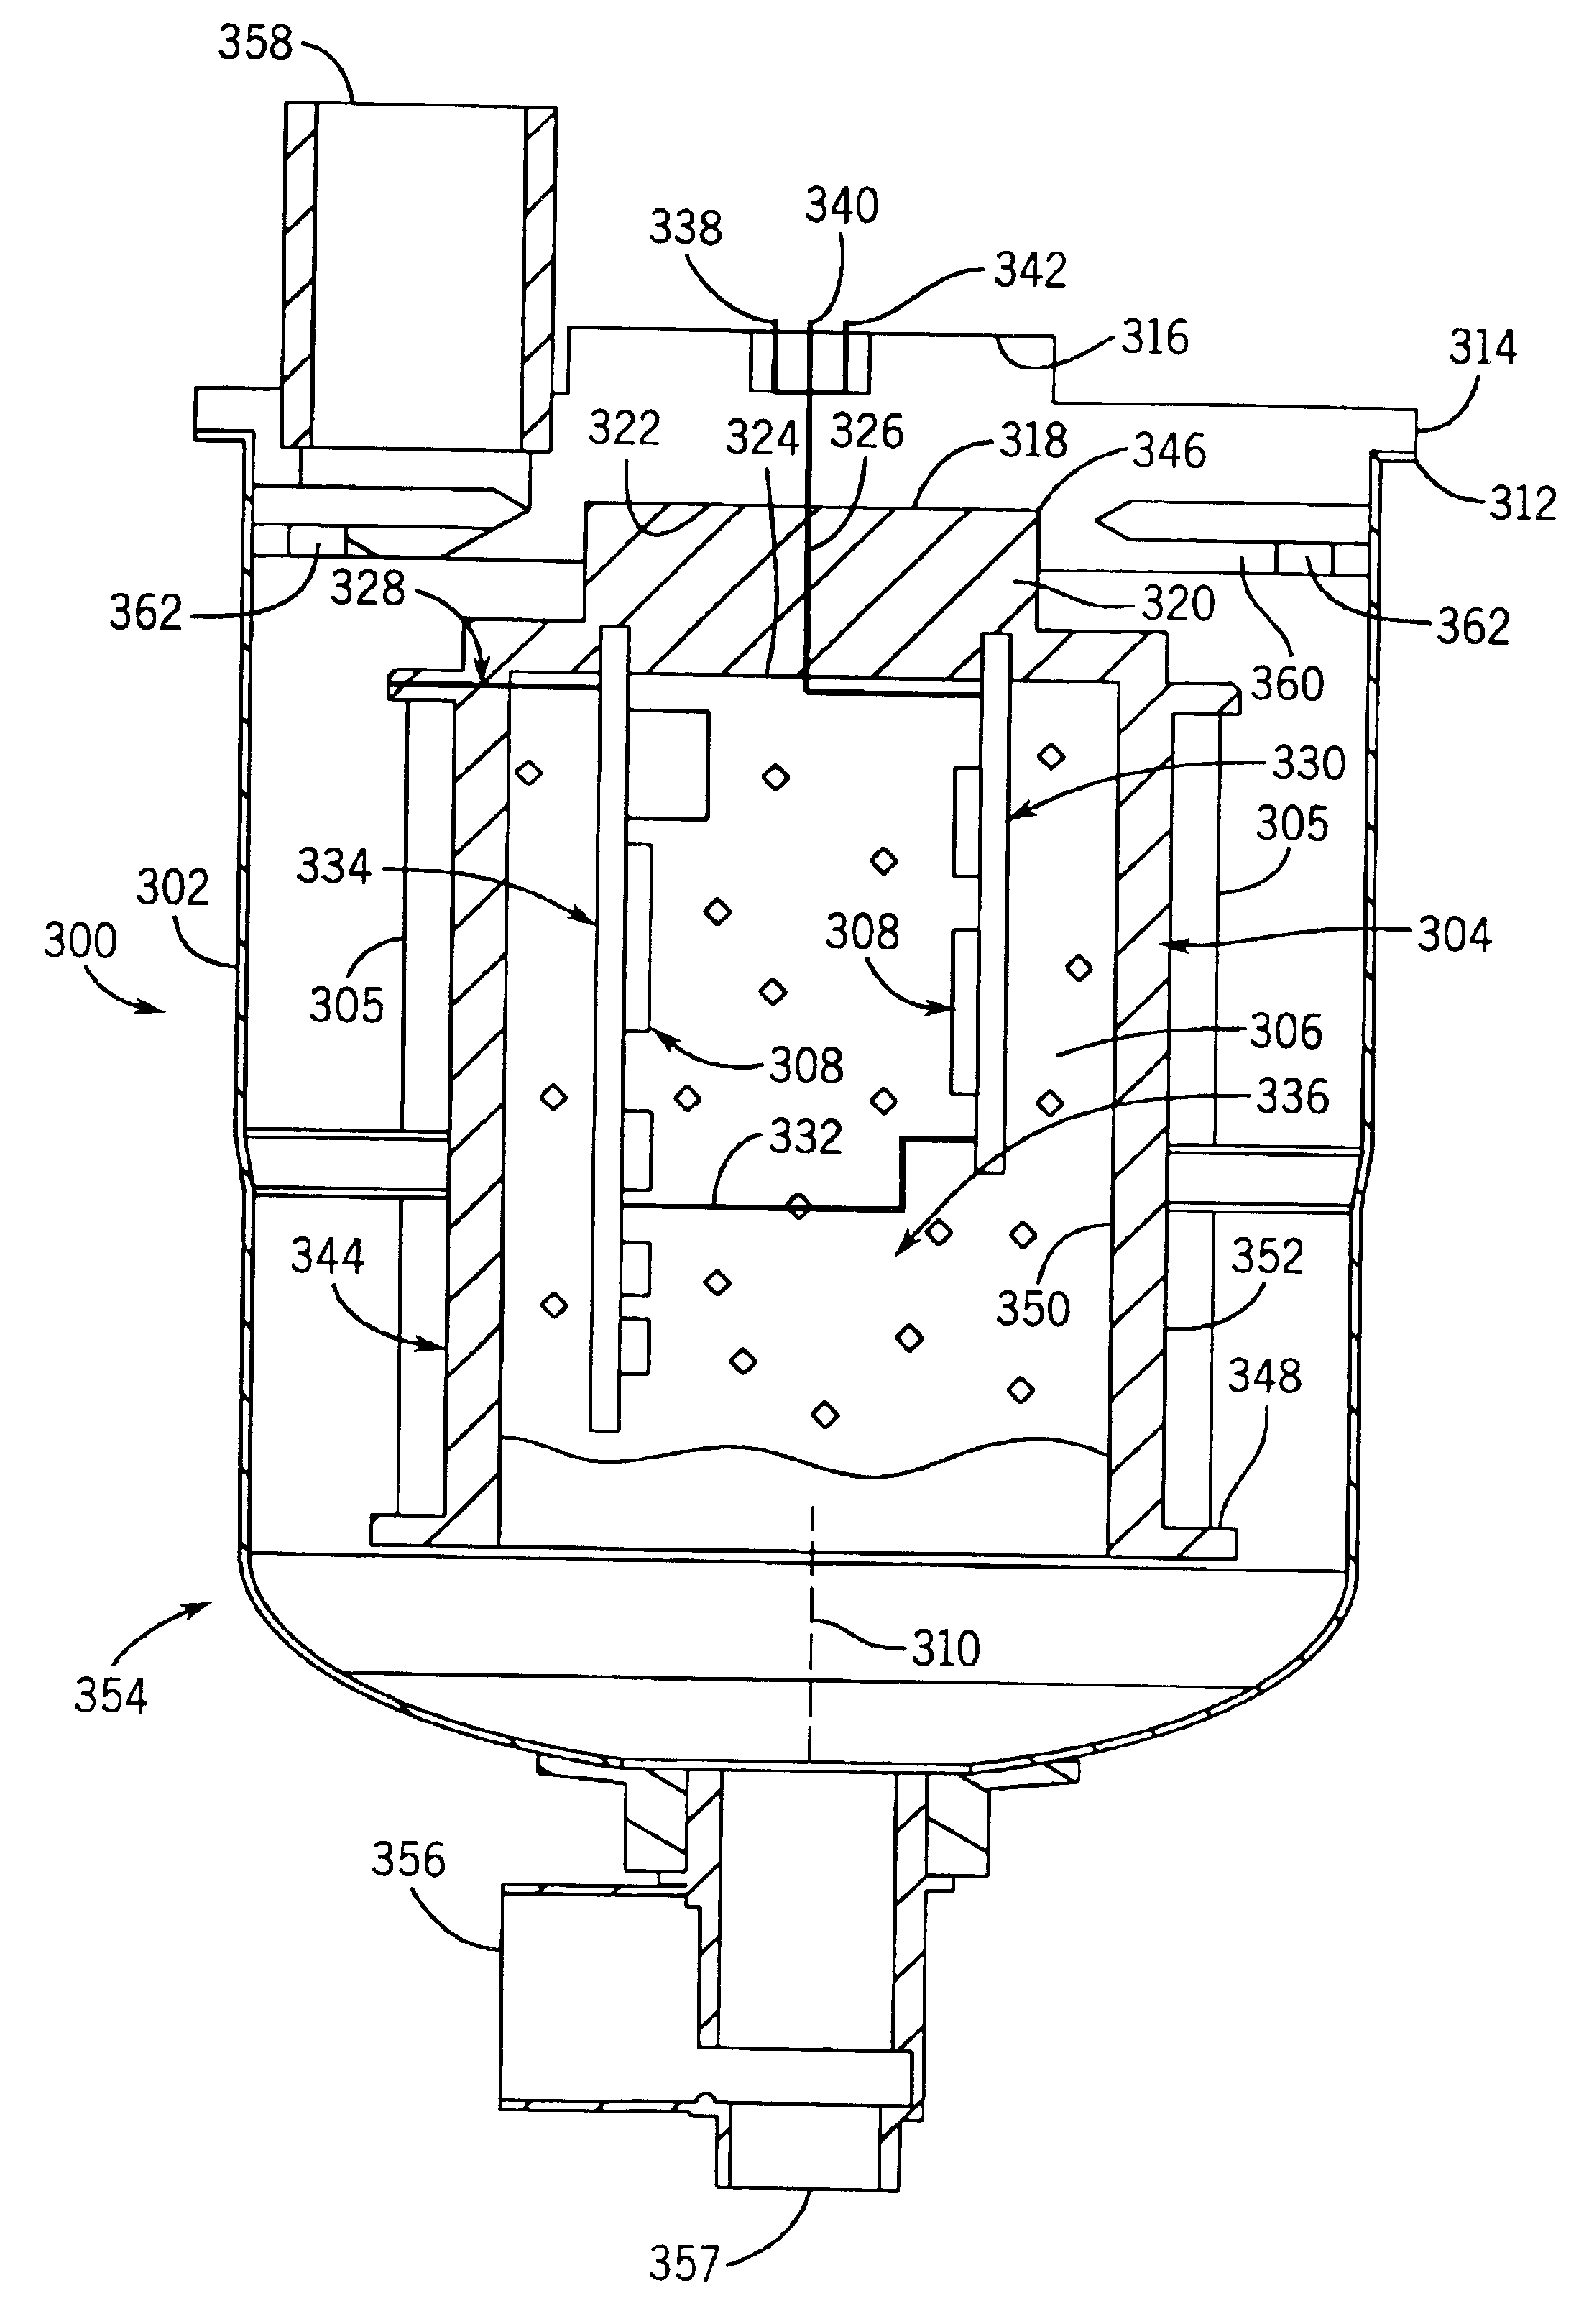 Electrostatic precipitator with internal power supply